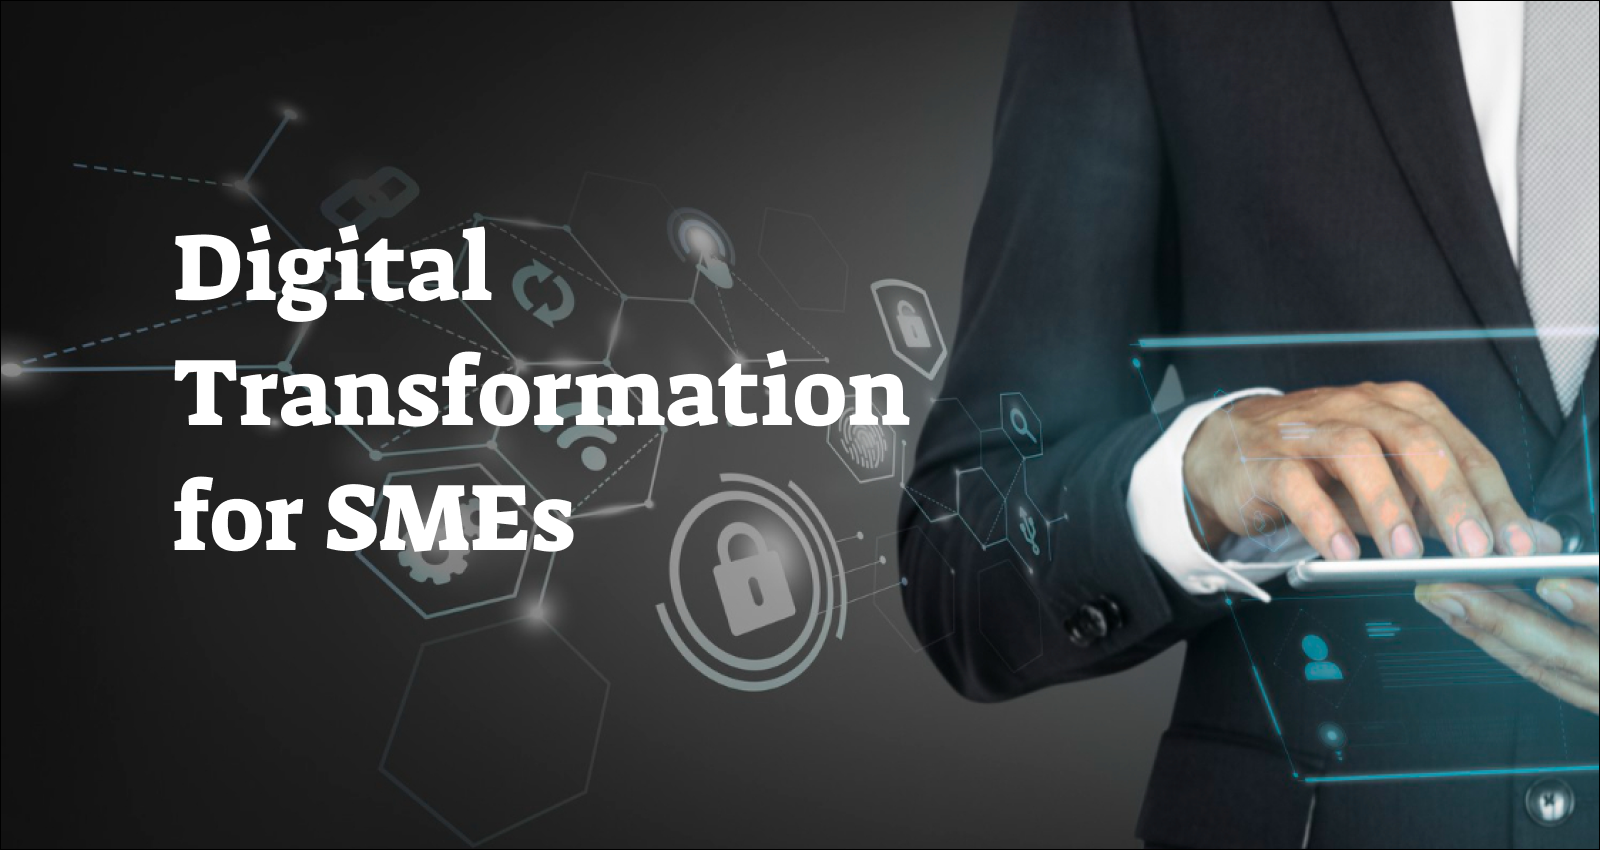 Emerging Trends in Digital Transformation for Mid-Sized Enterprises, Digital Transformation, Small & Medium Enterprises, SMEs, AI-ML Technologies, No Code & Low Code, App Modernization, Cybersecurity, Cloud Computing, Automation.